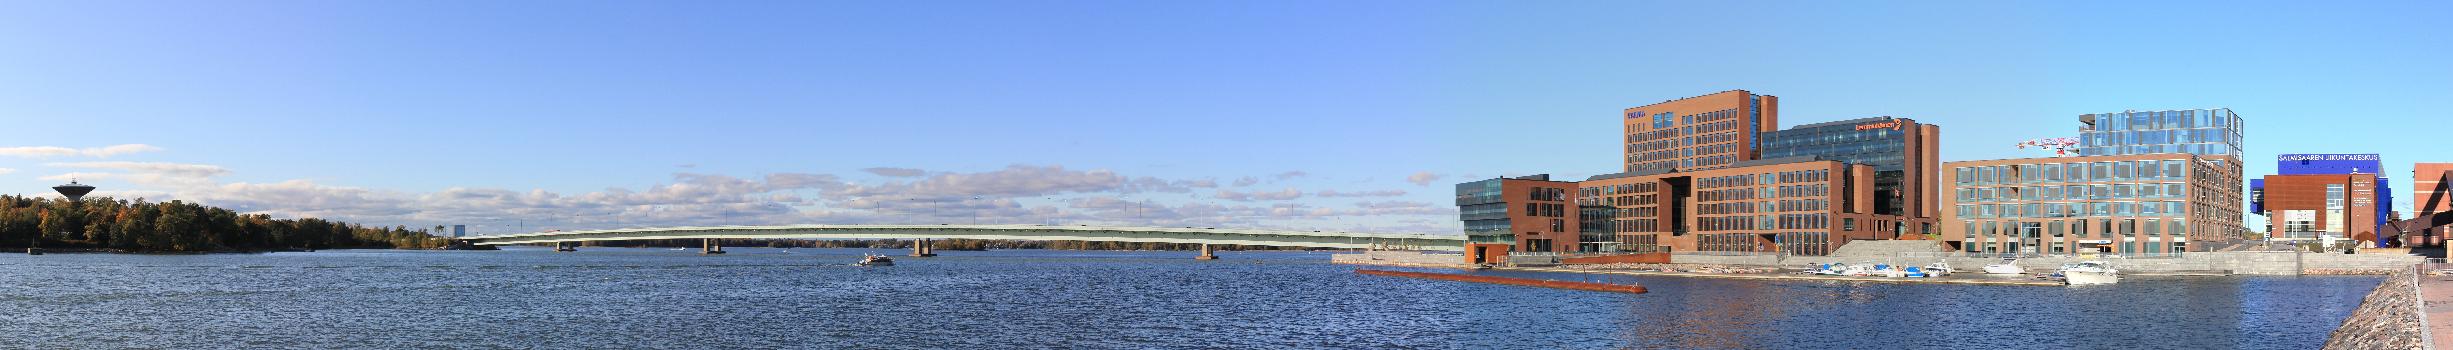 Panorama of Lapinlahti bridge with Salmisaari on the right